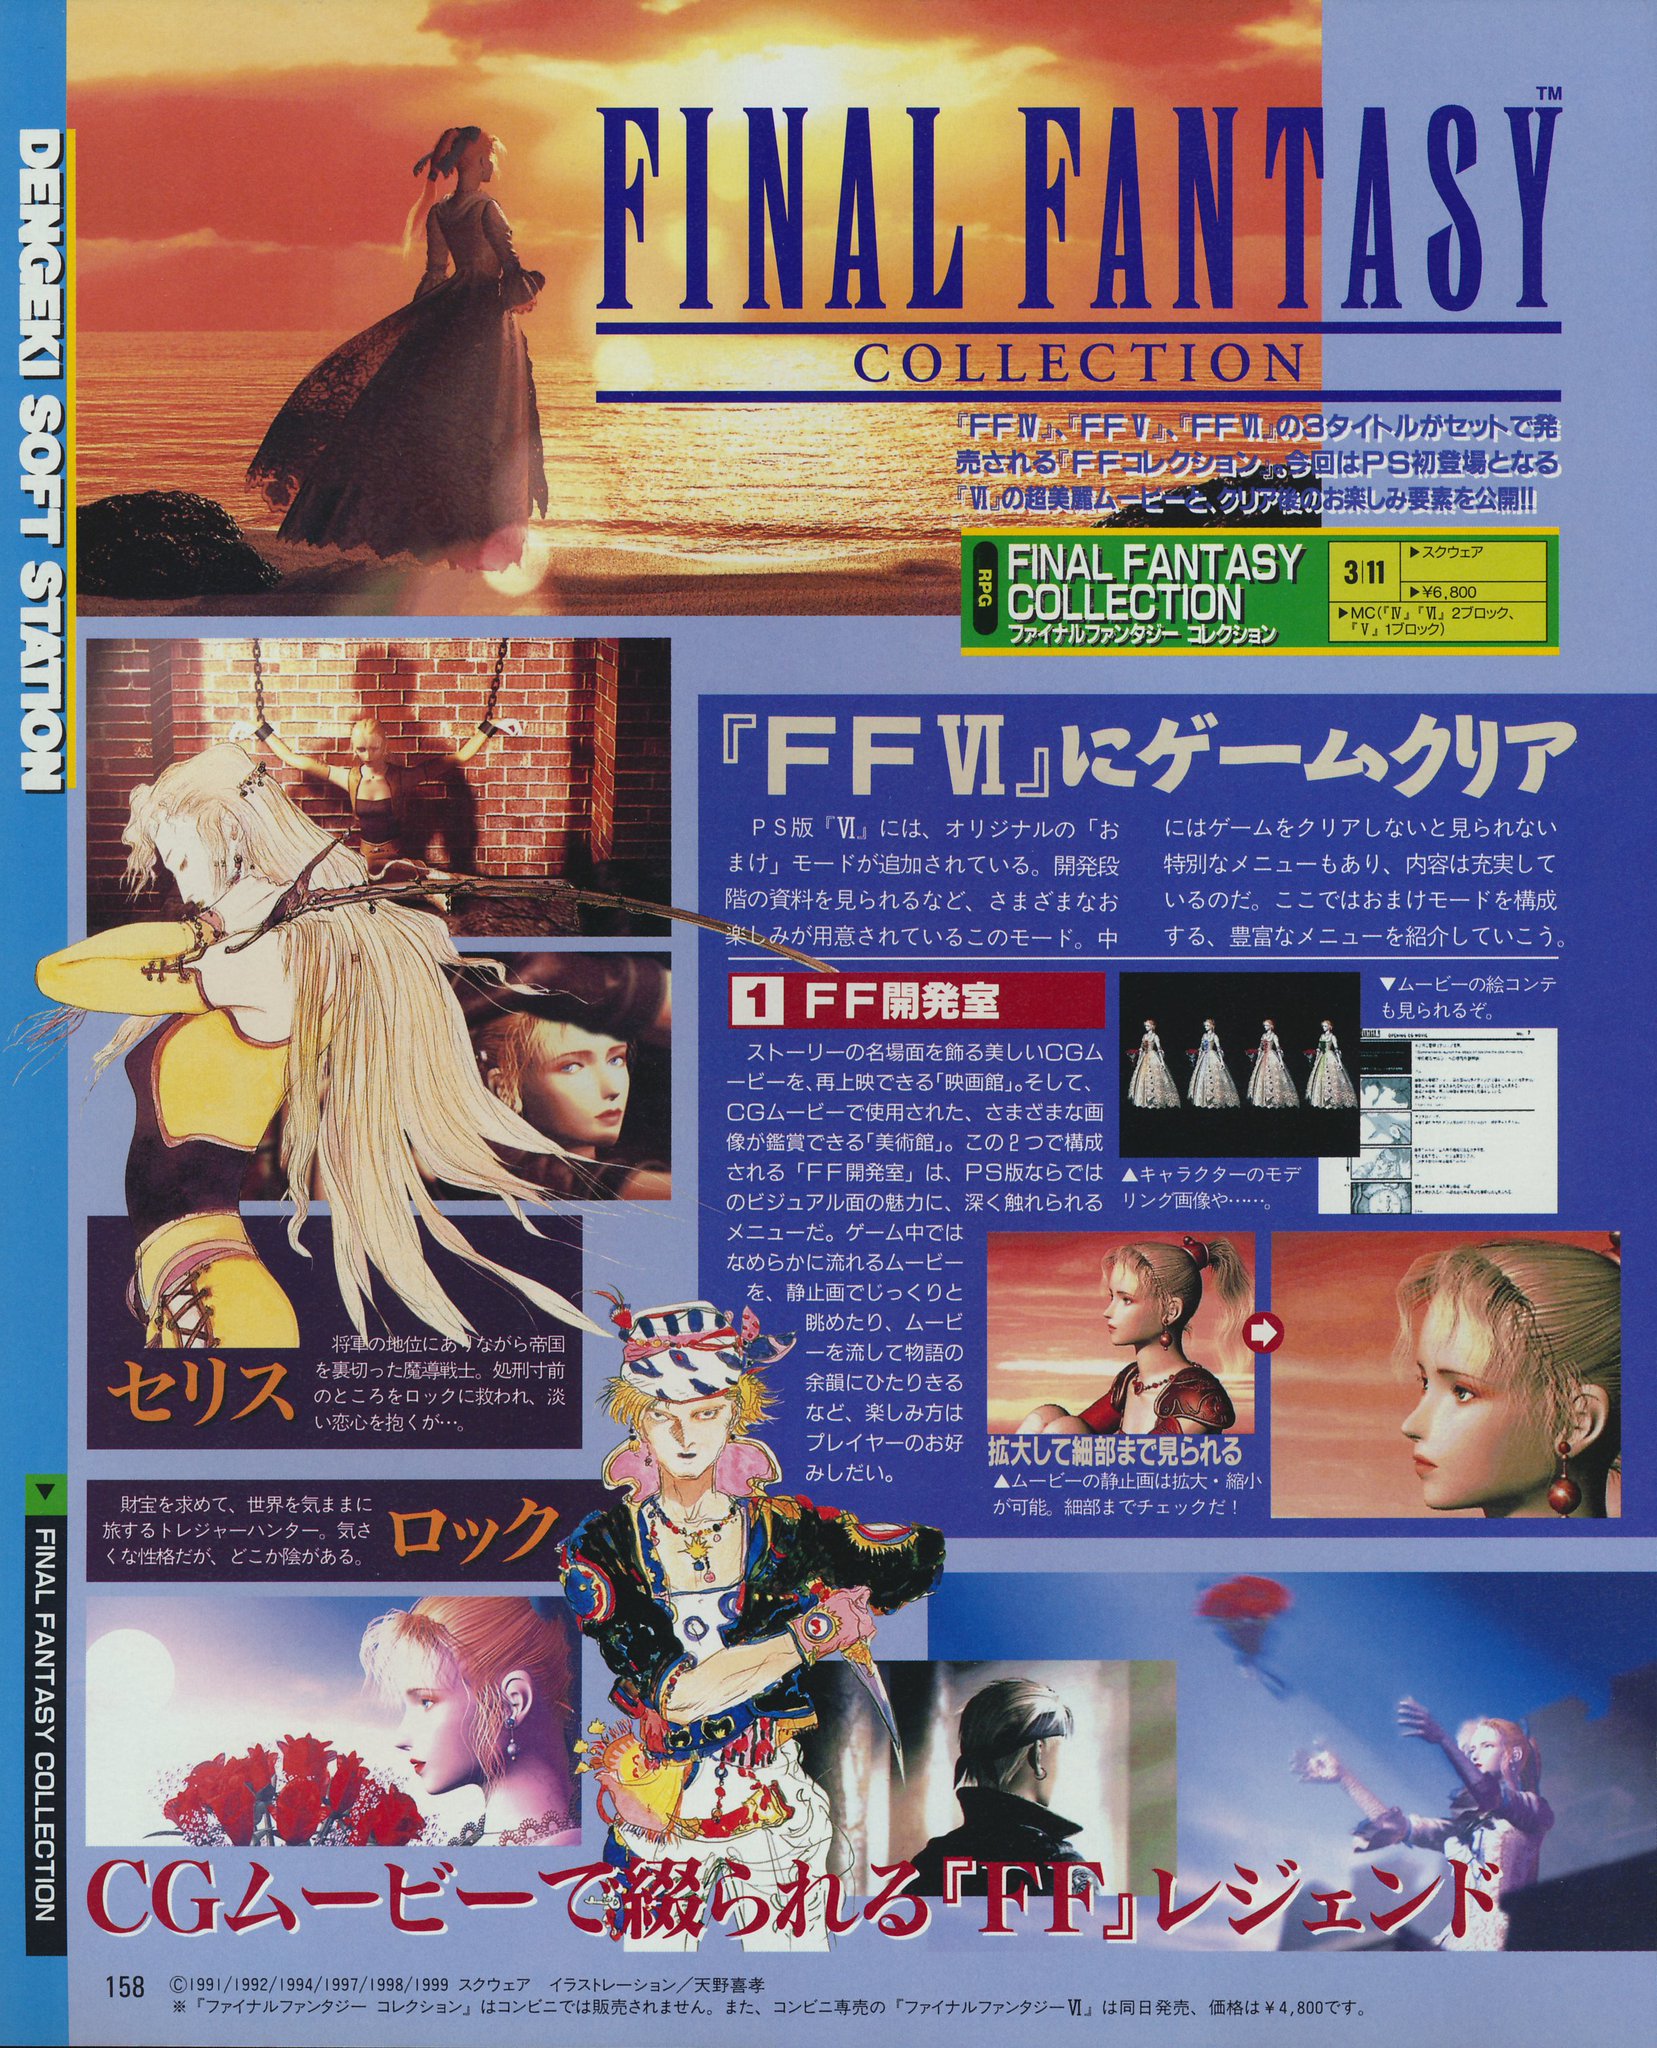 Frank Dewindt Ii Final Fantasy Vi Ps1 Dengeki Playstation February 26th 1999 Scans I Scanned The Best Final Fantasy Game Hands Down T Co Bmfj29nnhy